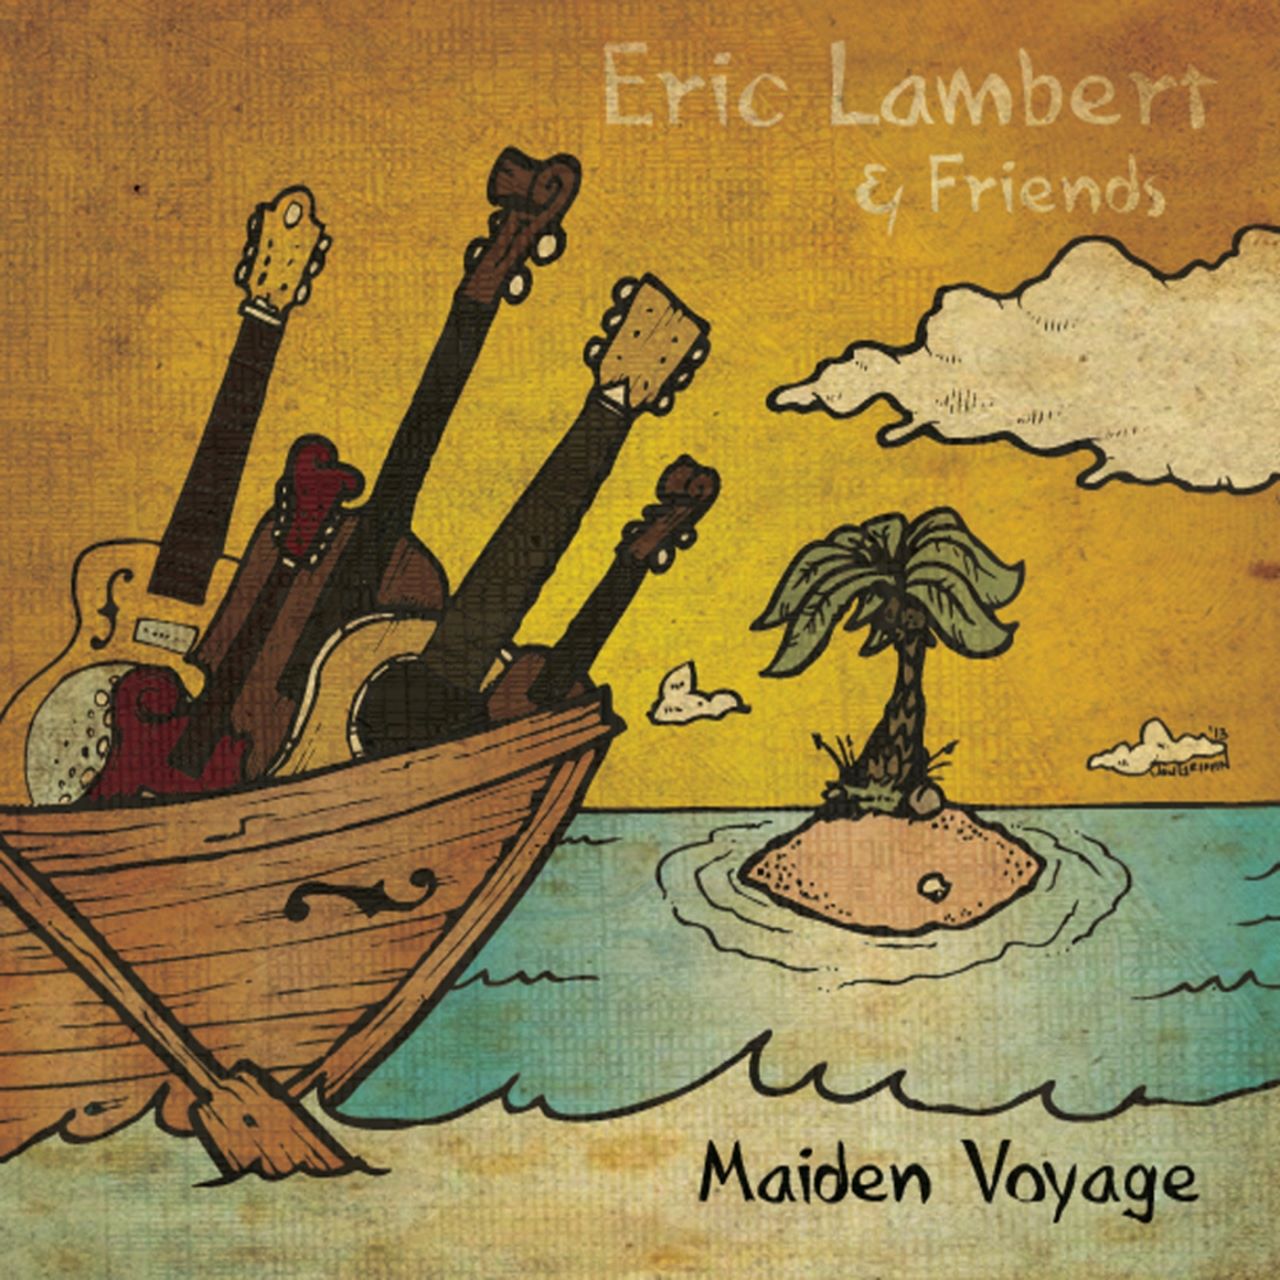 Eric Lambert & Friends - Maiden Voyage cover album